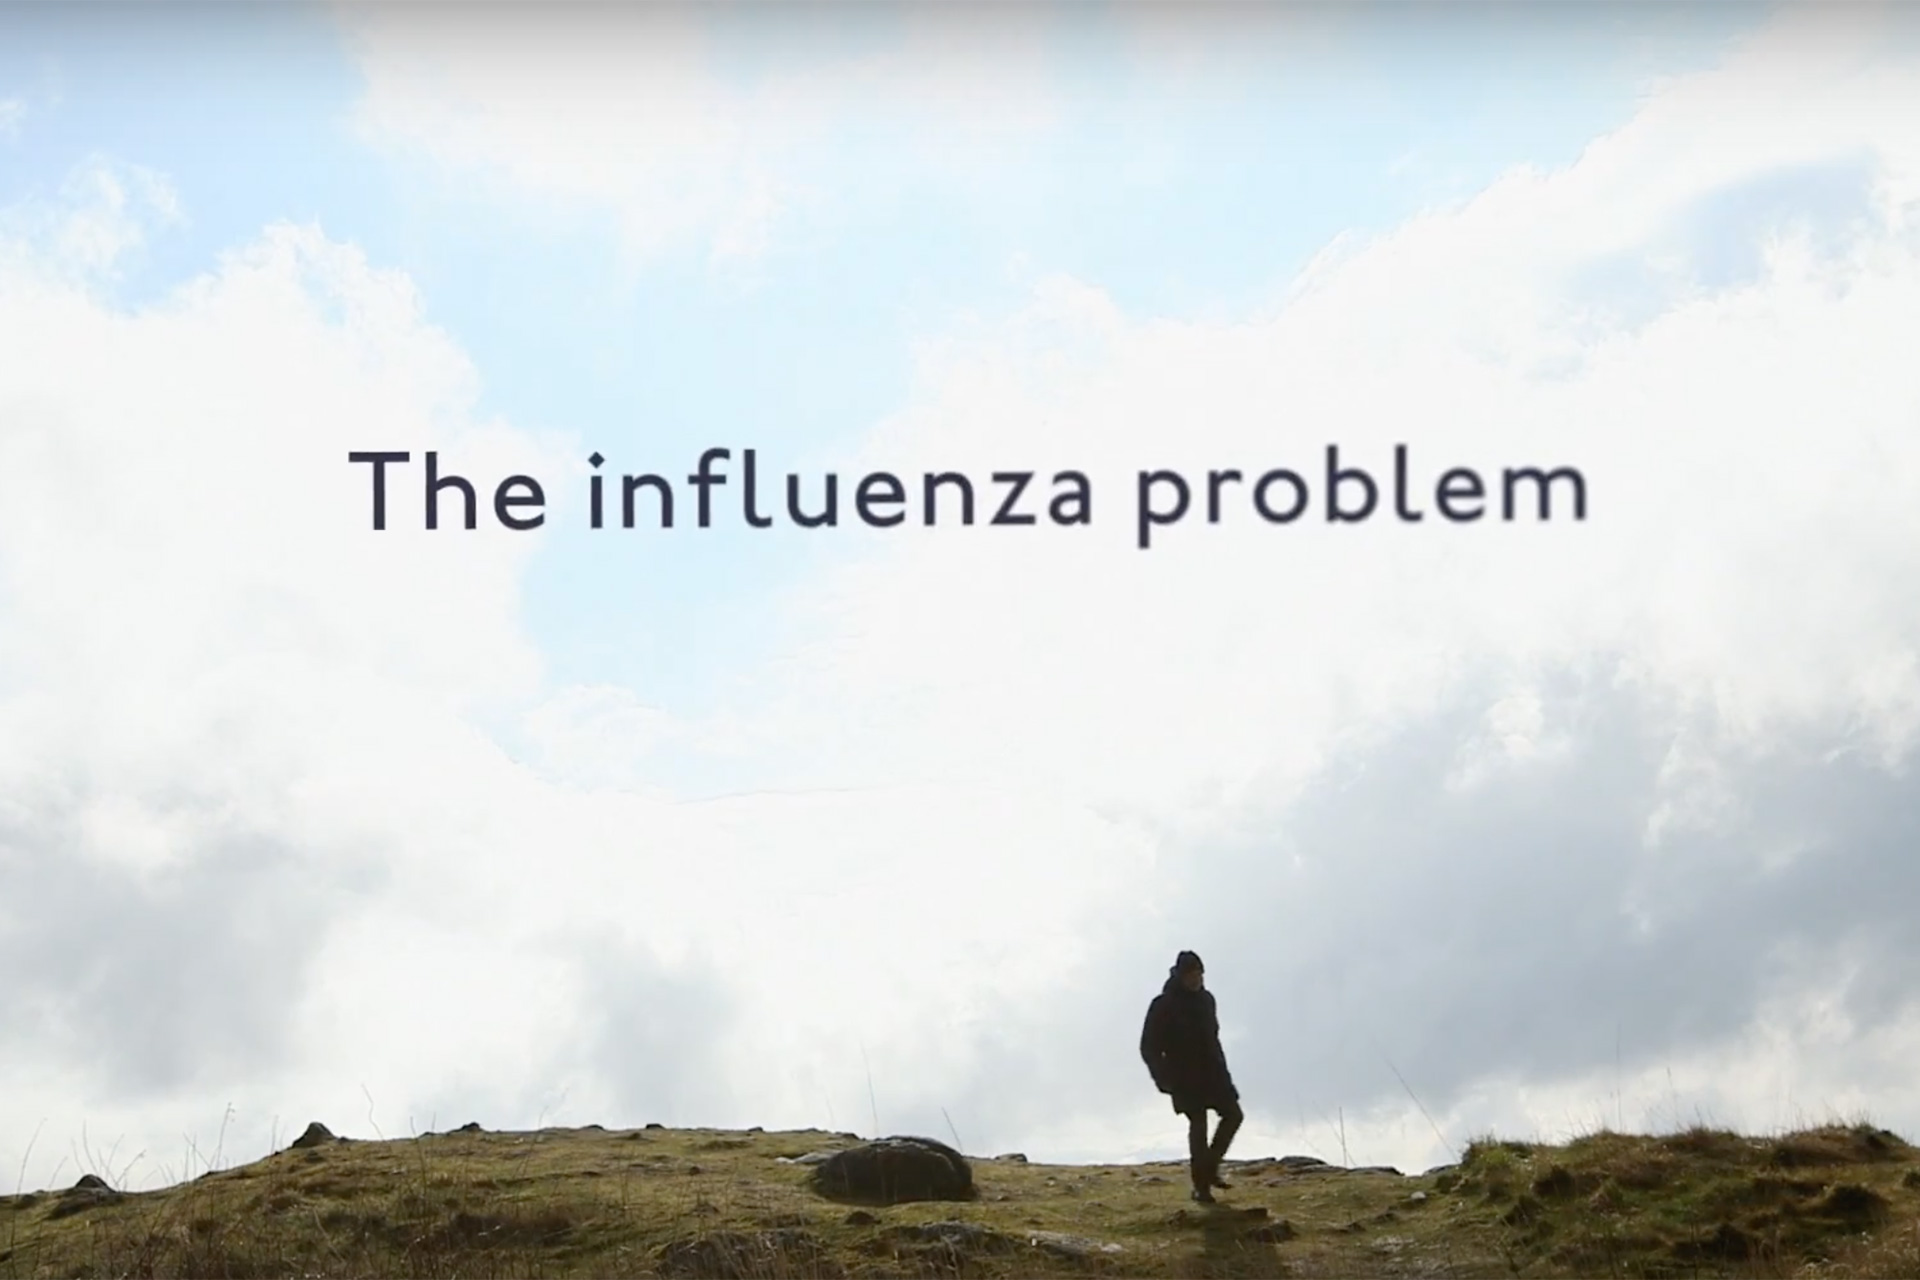 The Influenza problem